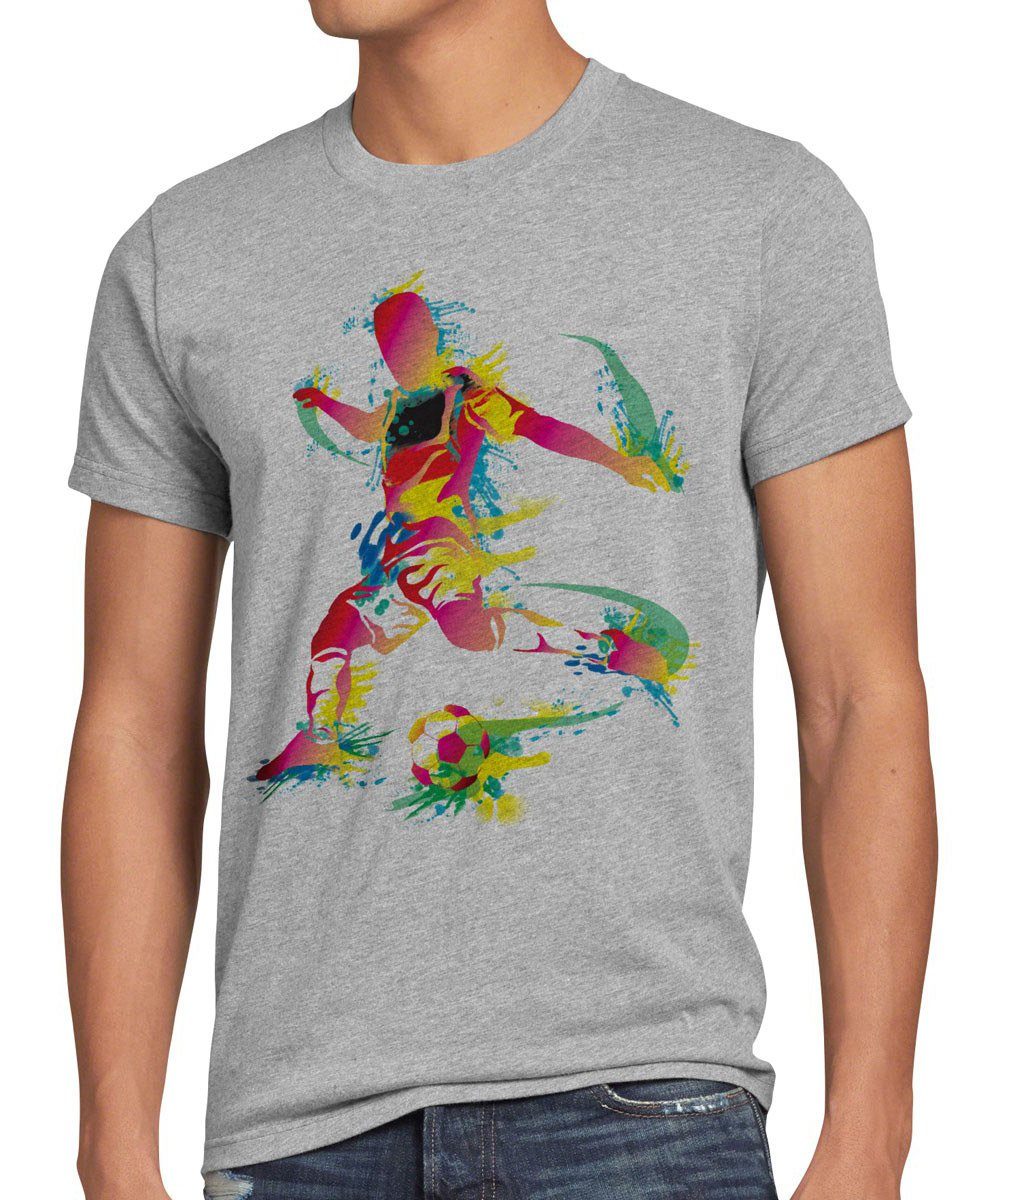 Germany style3 Trikot Deutschland T-Shirt Sport Herren EM Fan 2022 grau Fußball bundesliga Print-Shirt meliert